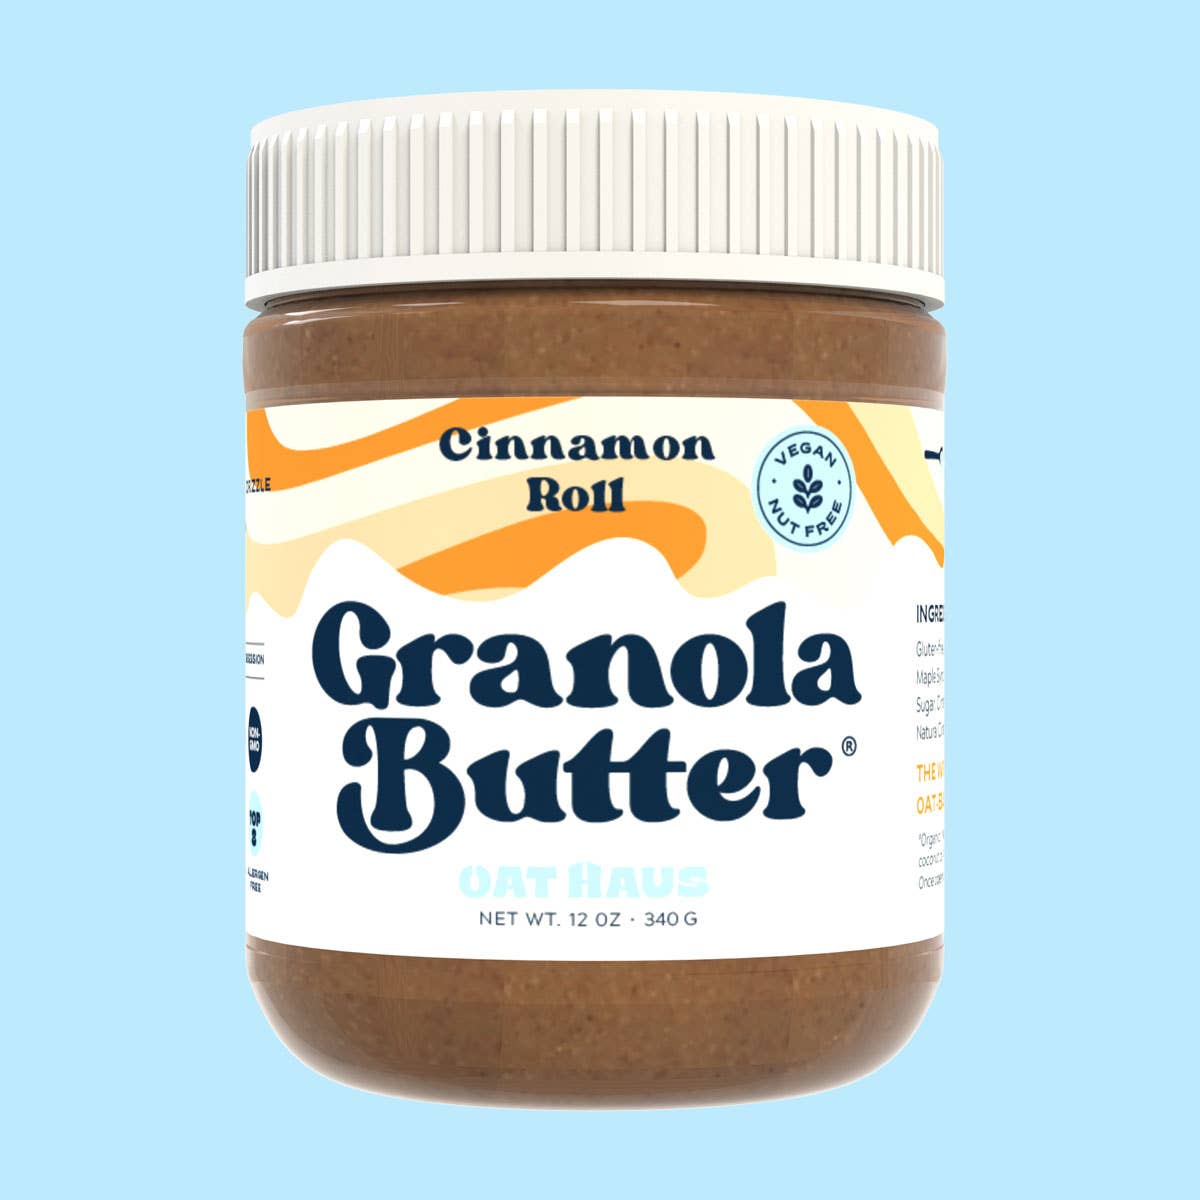 Cinnamon Roll Granola Butter | Nut-free, Vegan, GF Spread